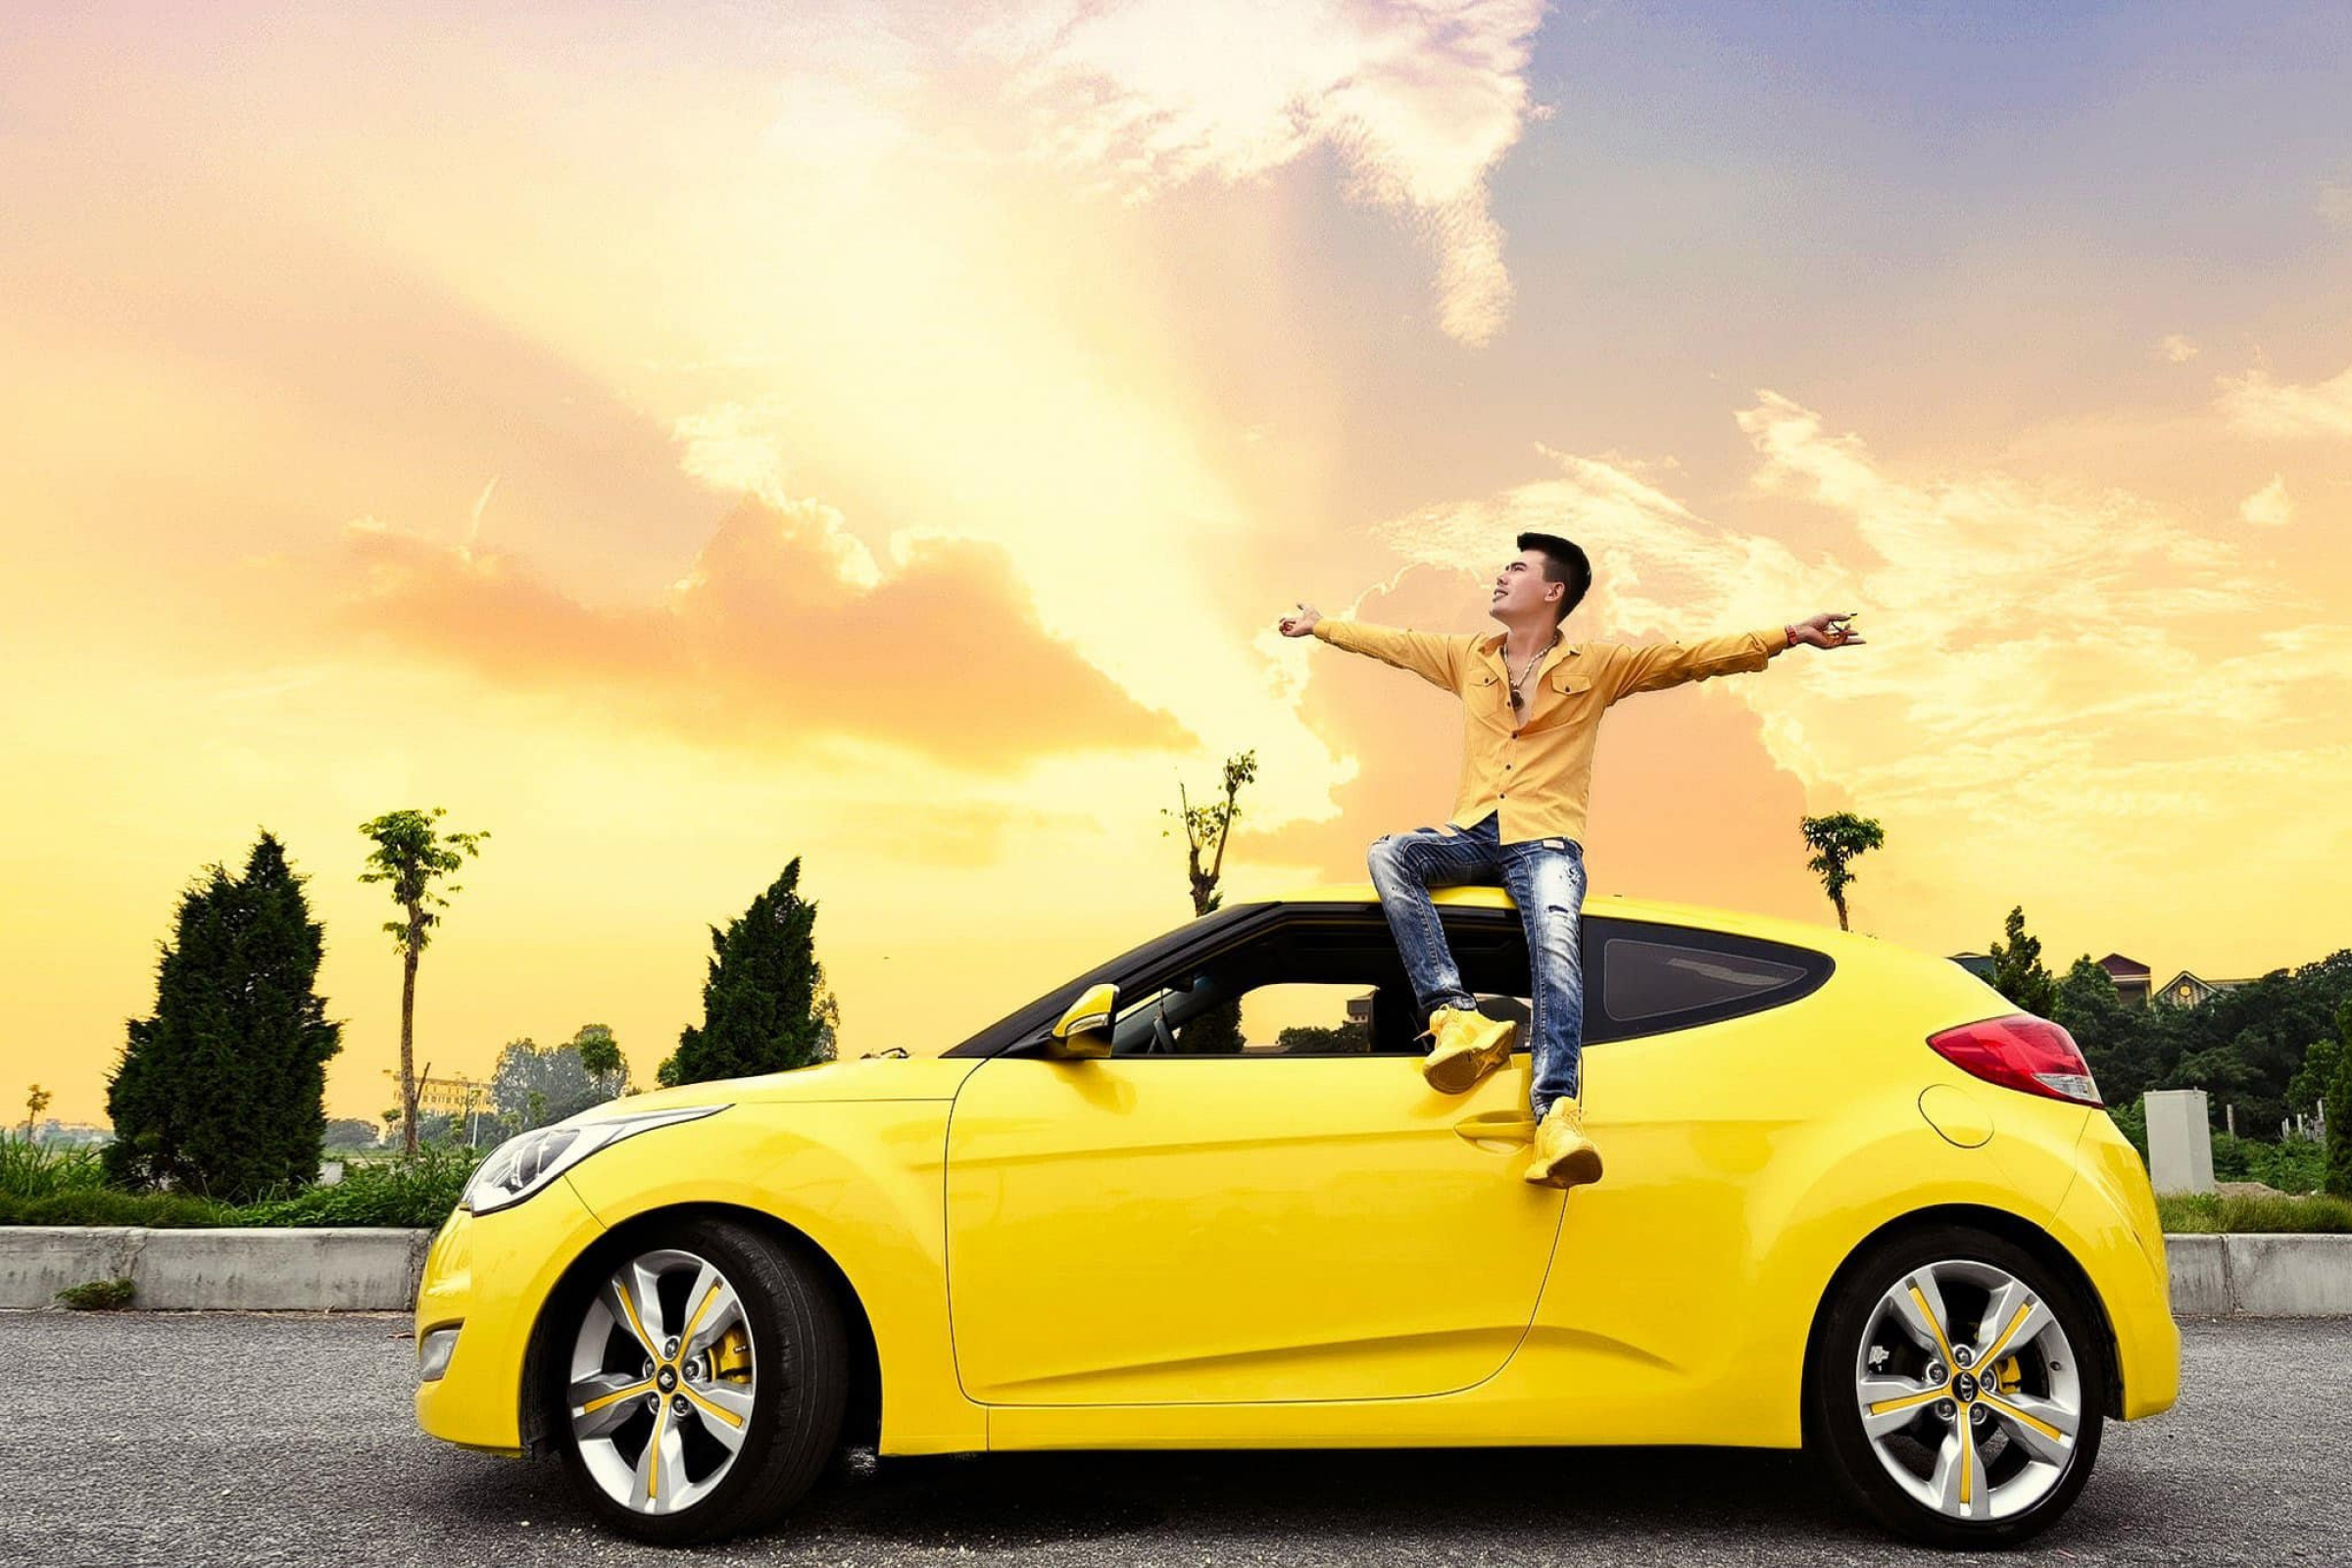 Включи желтую машину. Желтый автомобиль. Желтое авто. Автомобиль в желтом стиле. Чувак на желтой машине.